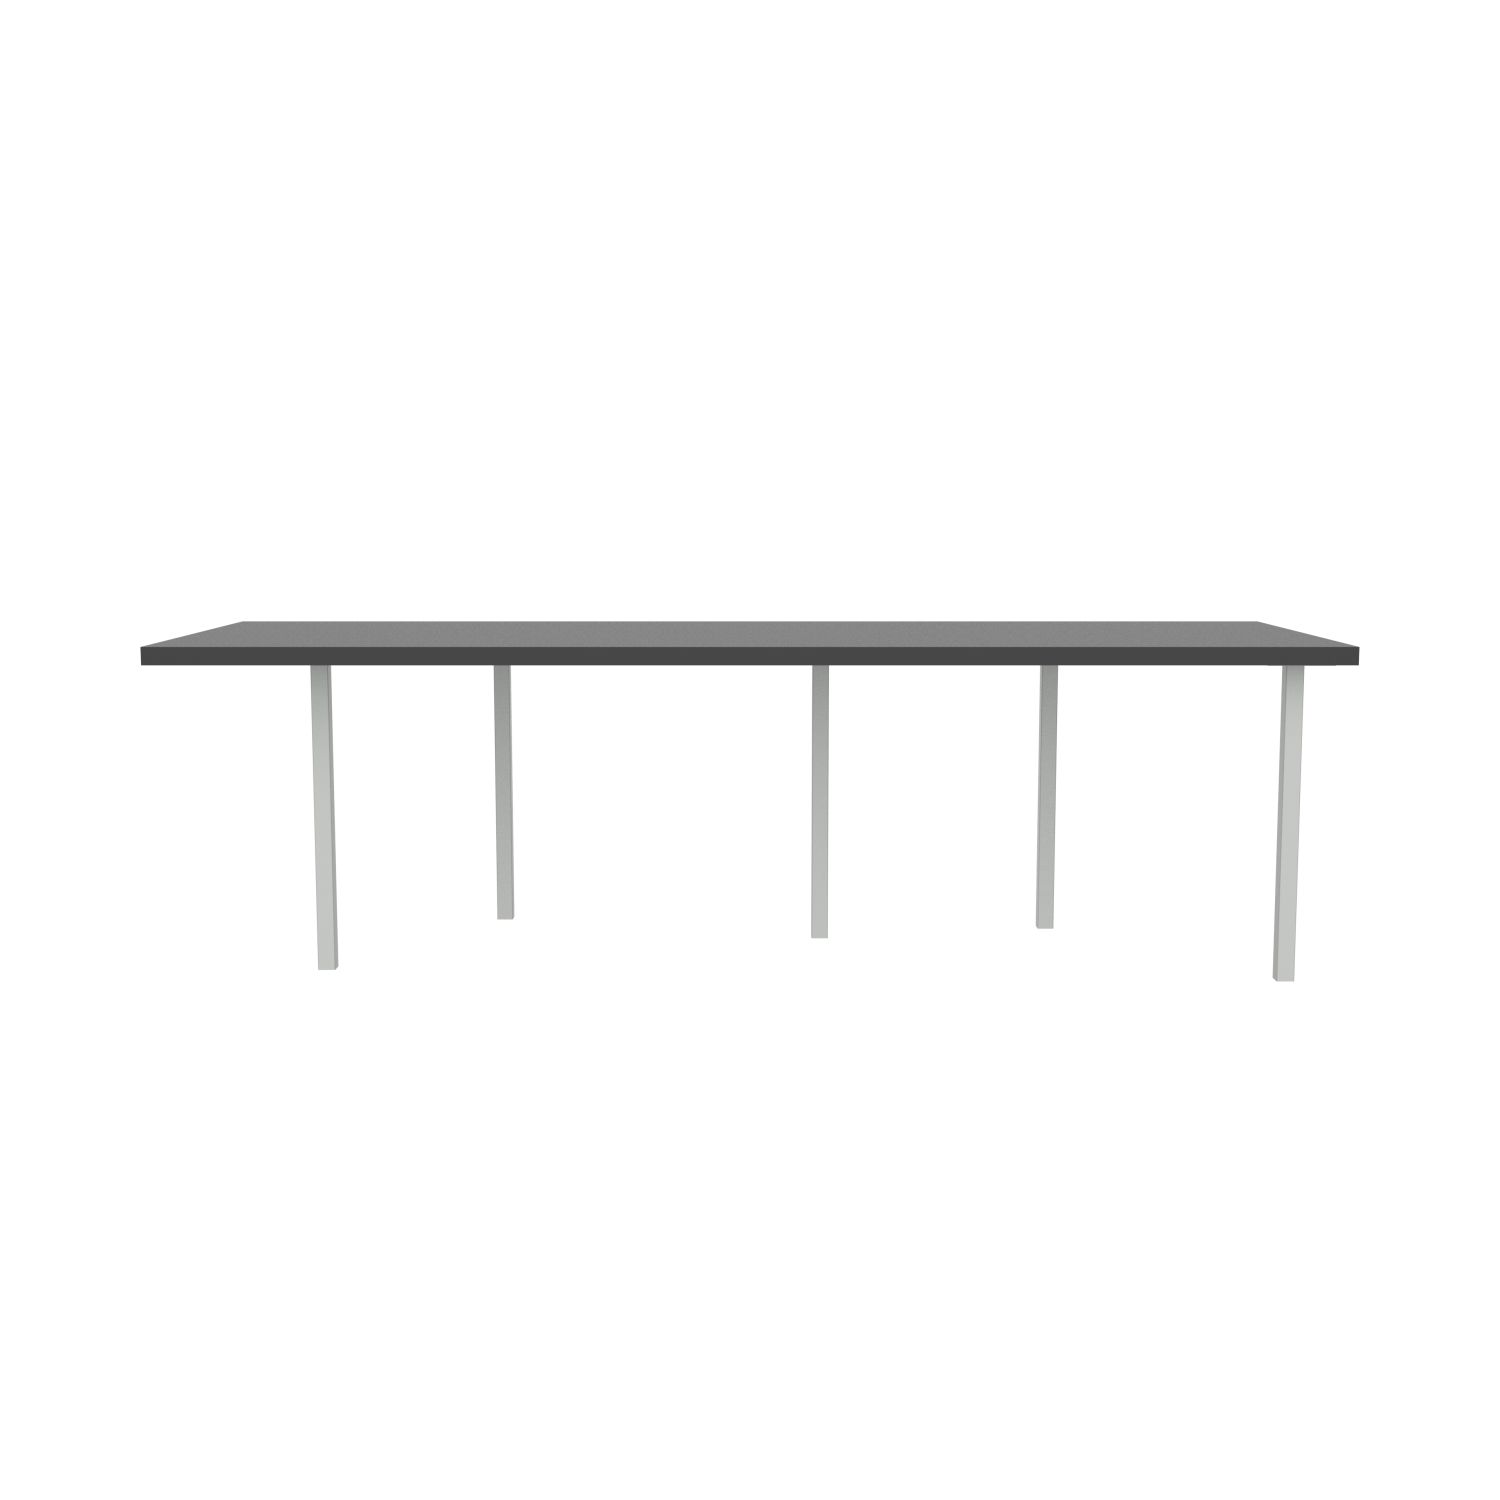 lensvelt bbrand table five fixed heigt 915x264 hpl black 50 mm price level 1 light grey ral7035